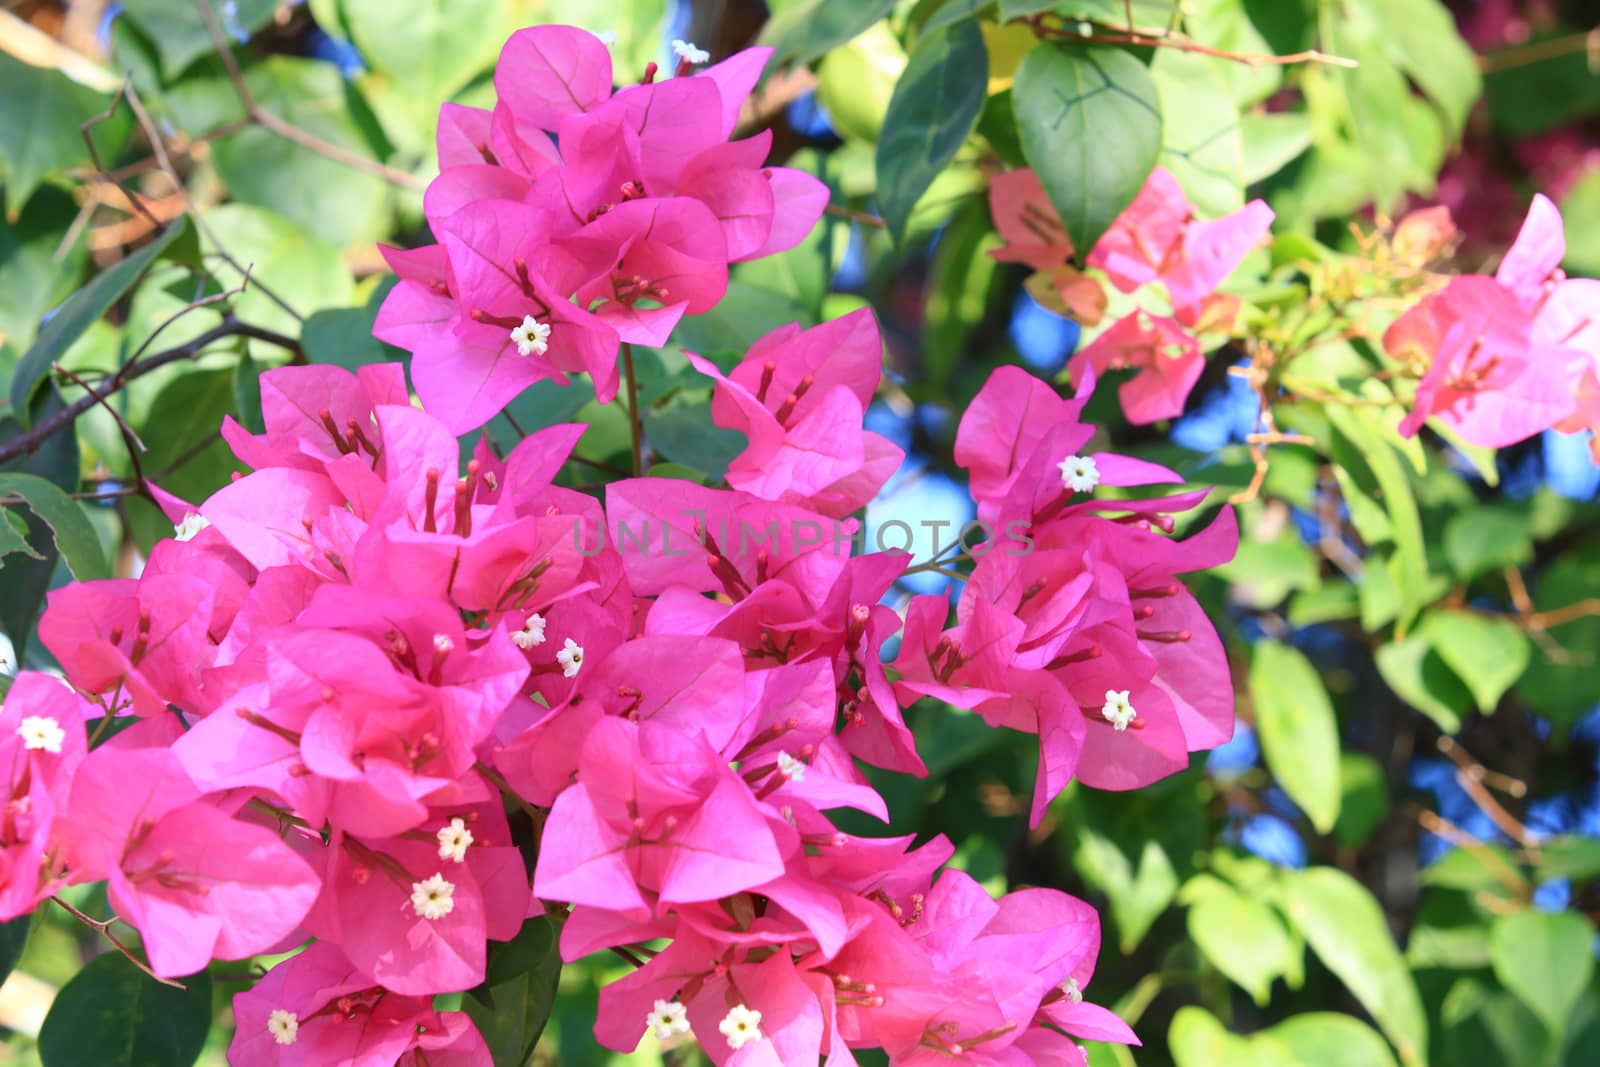 Beautiful pink red bougainvillea blooming, Bright pink red bougainvillea flowers as a floral background,Bougainvillea flowers texture and background,Close-up Bougainvillea tree with flowers 